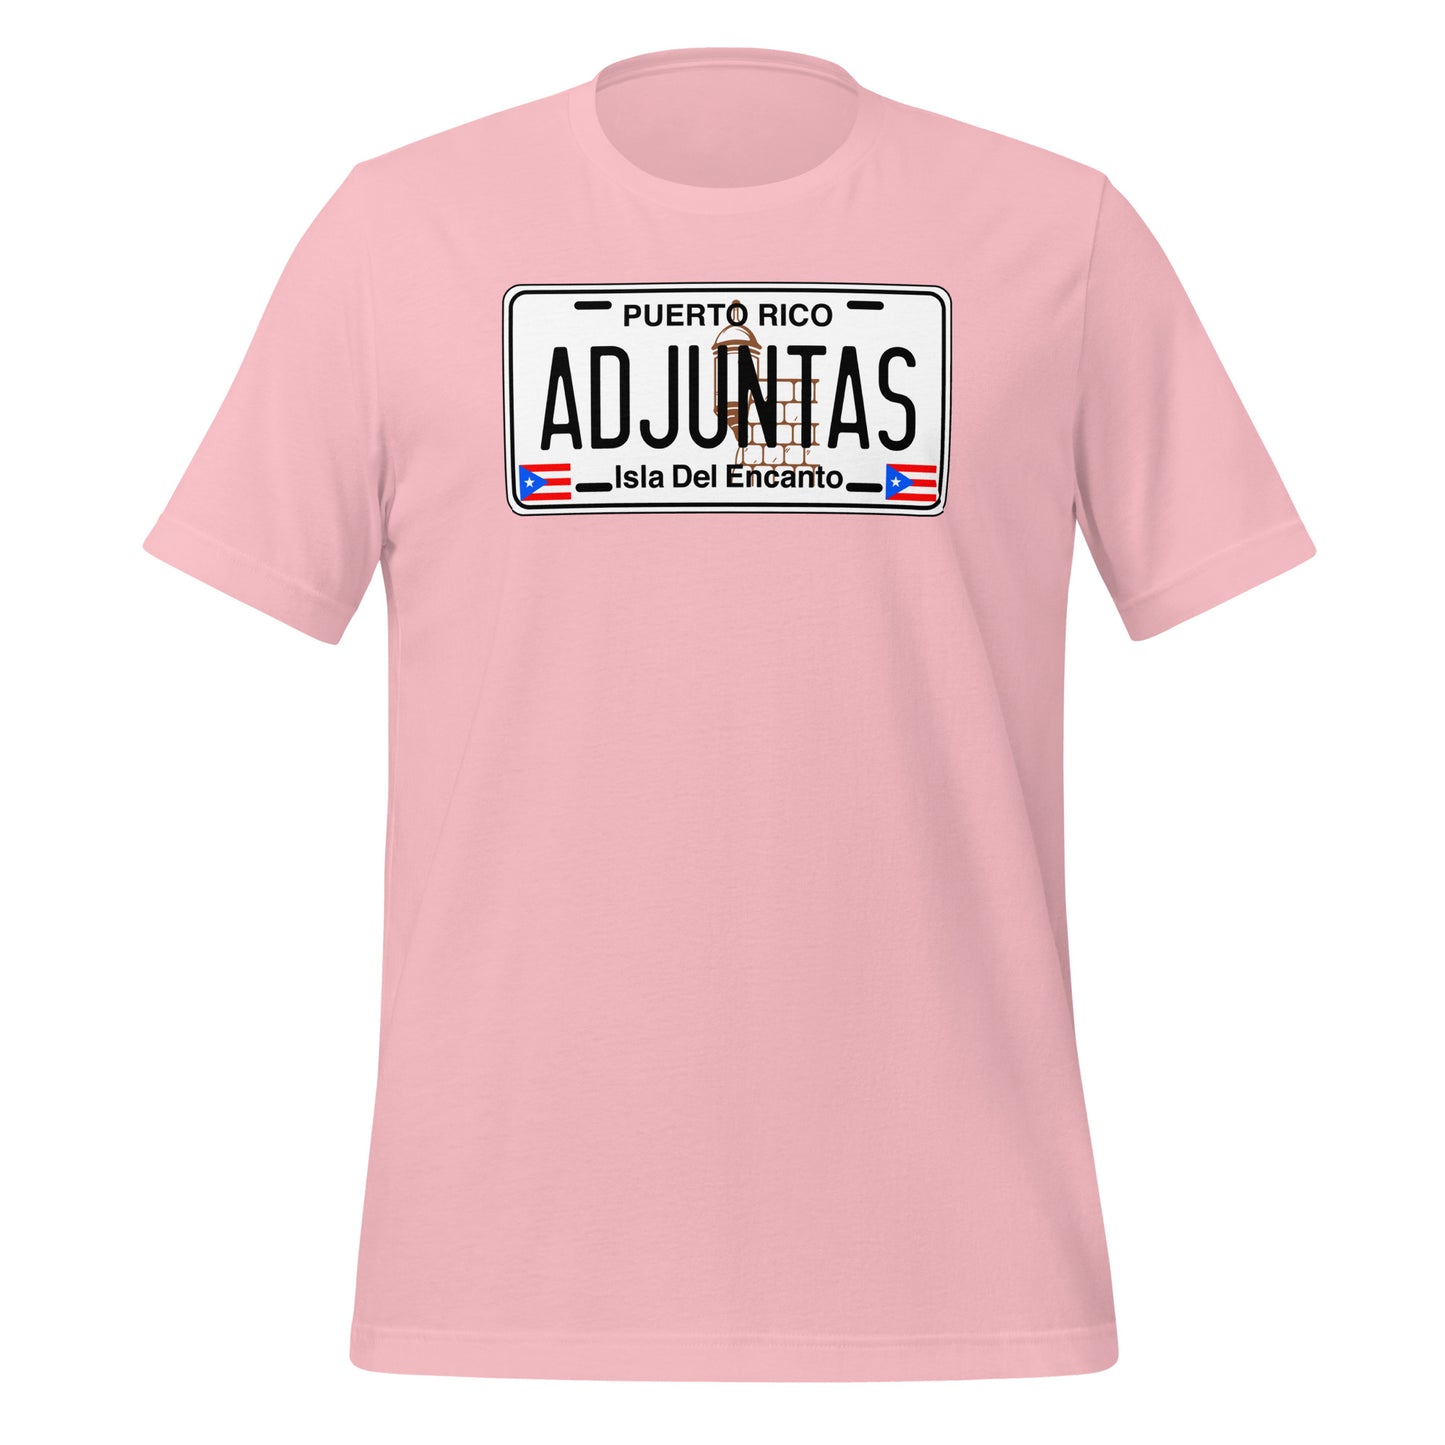 Adjuntas Puerto Rico License Plate Unisex T-Shirt